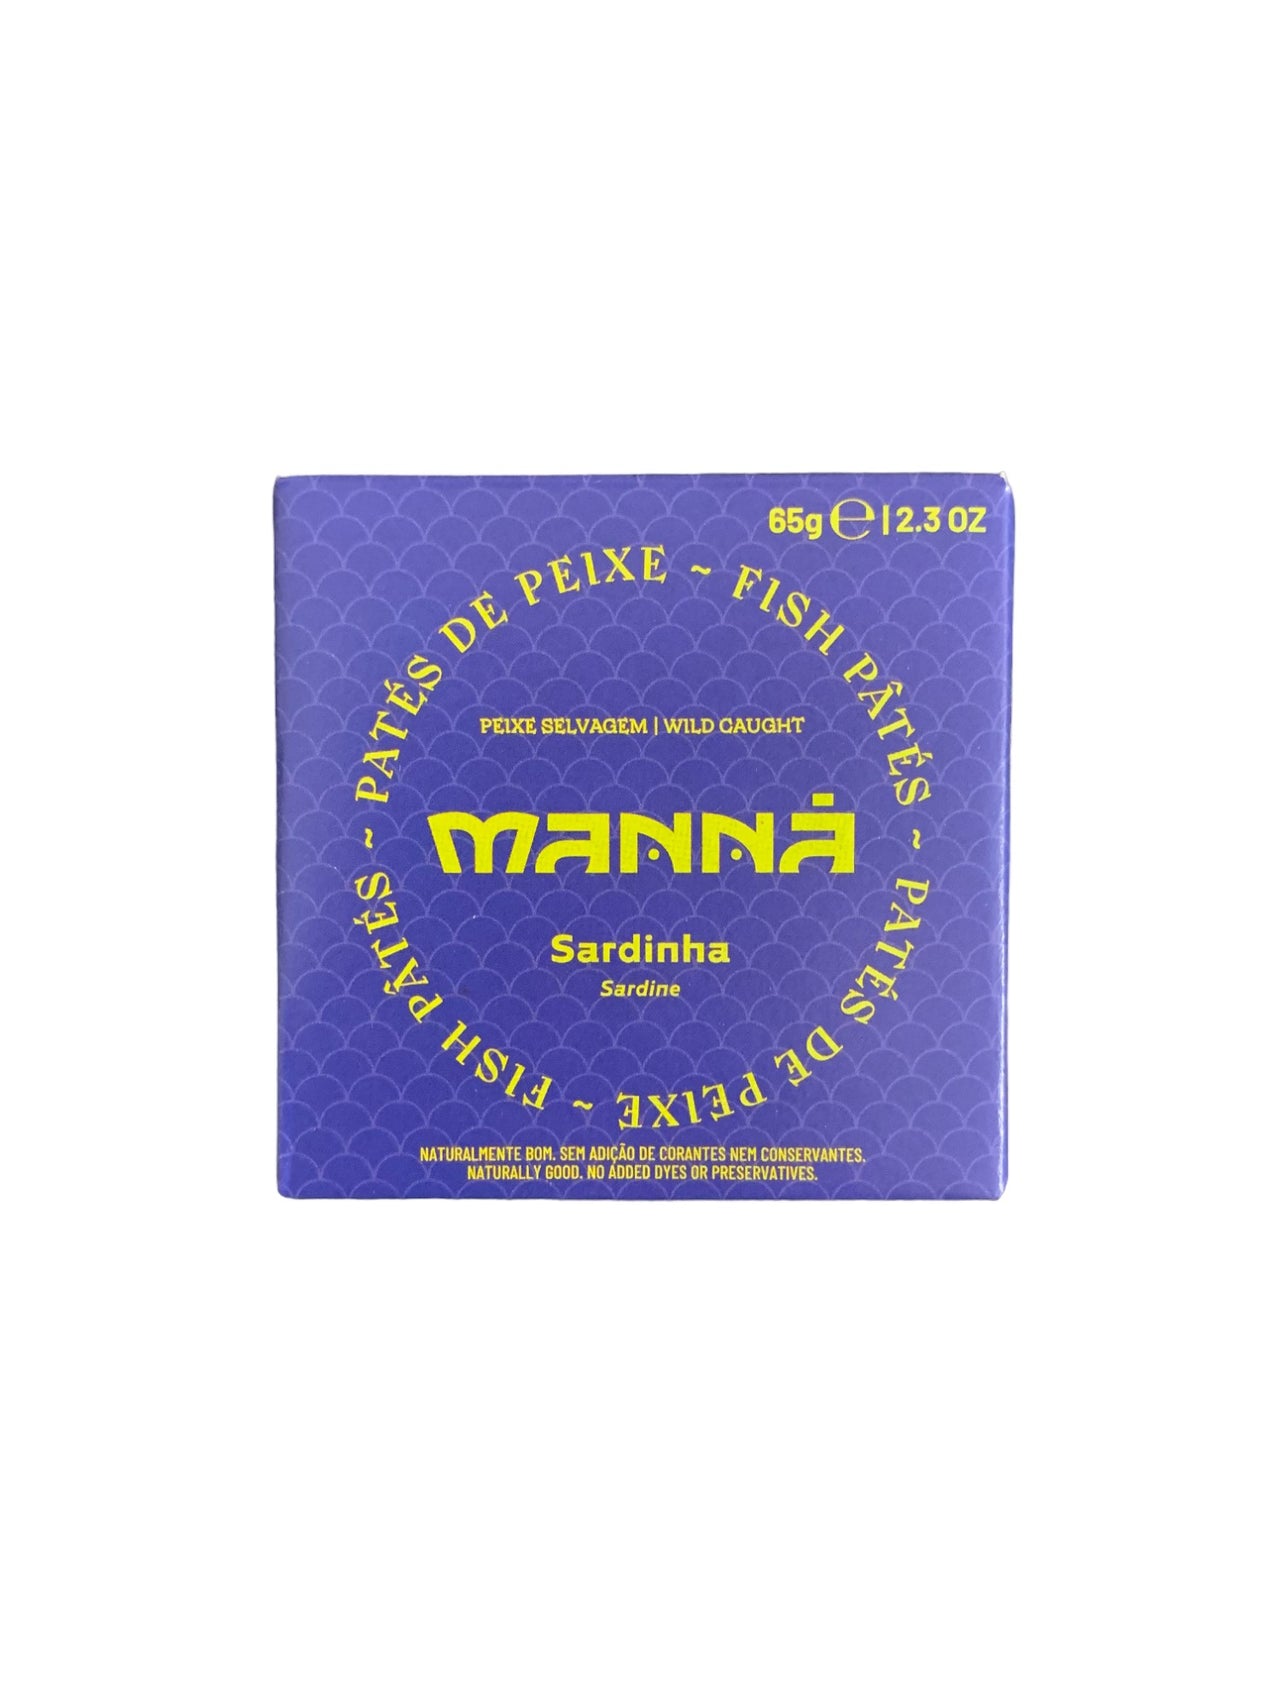 Manná Sardine Pate - 3 Pack - TinCanFish